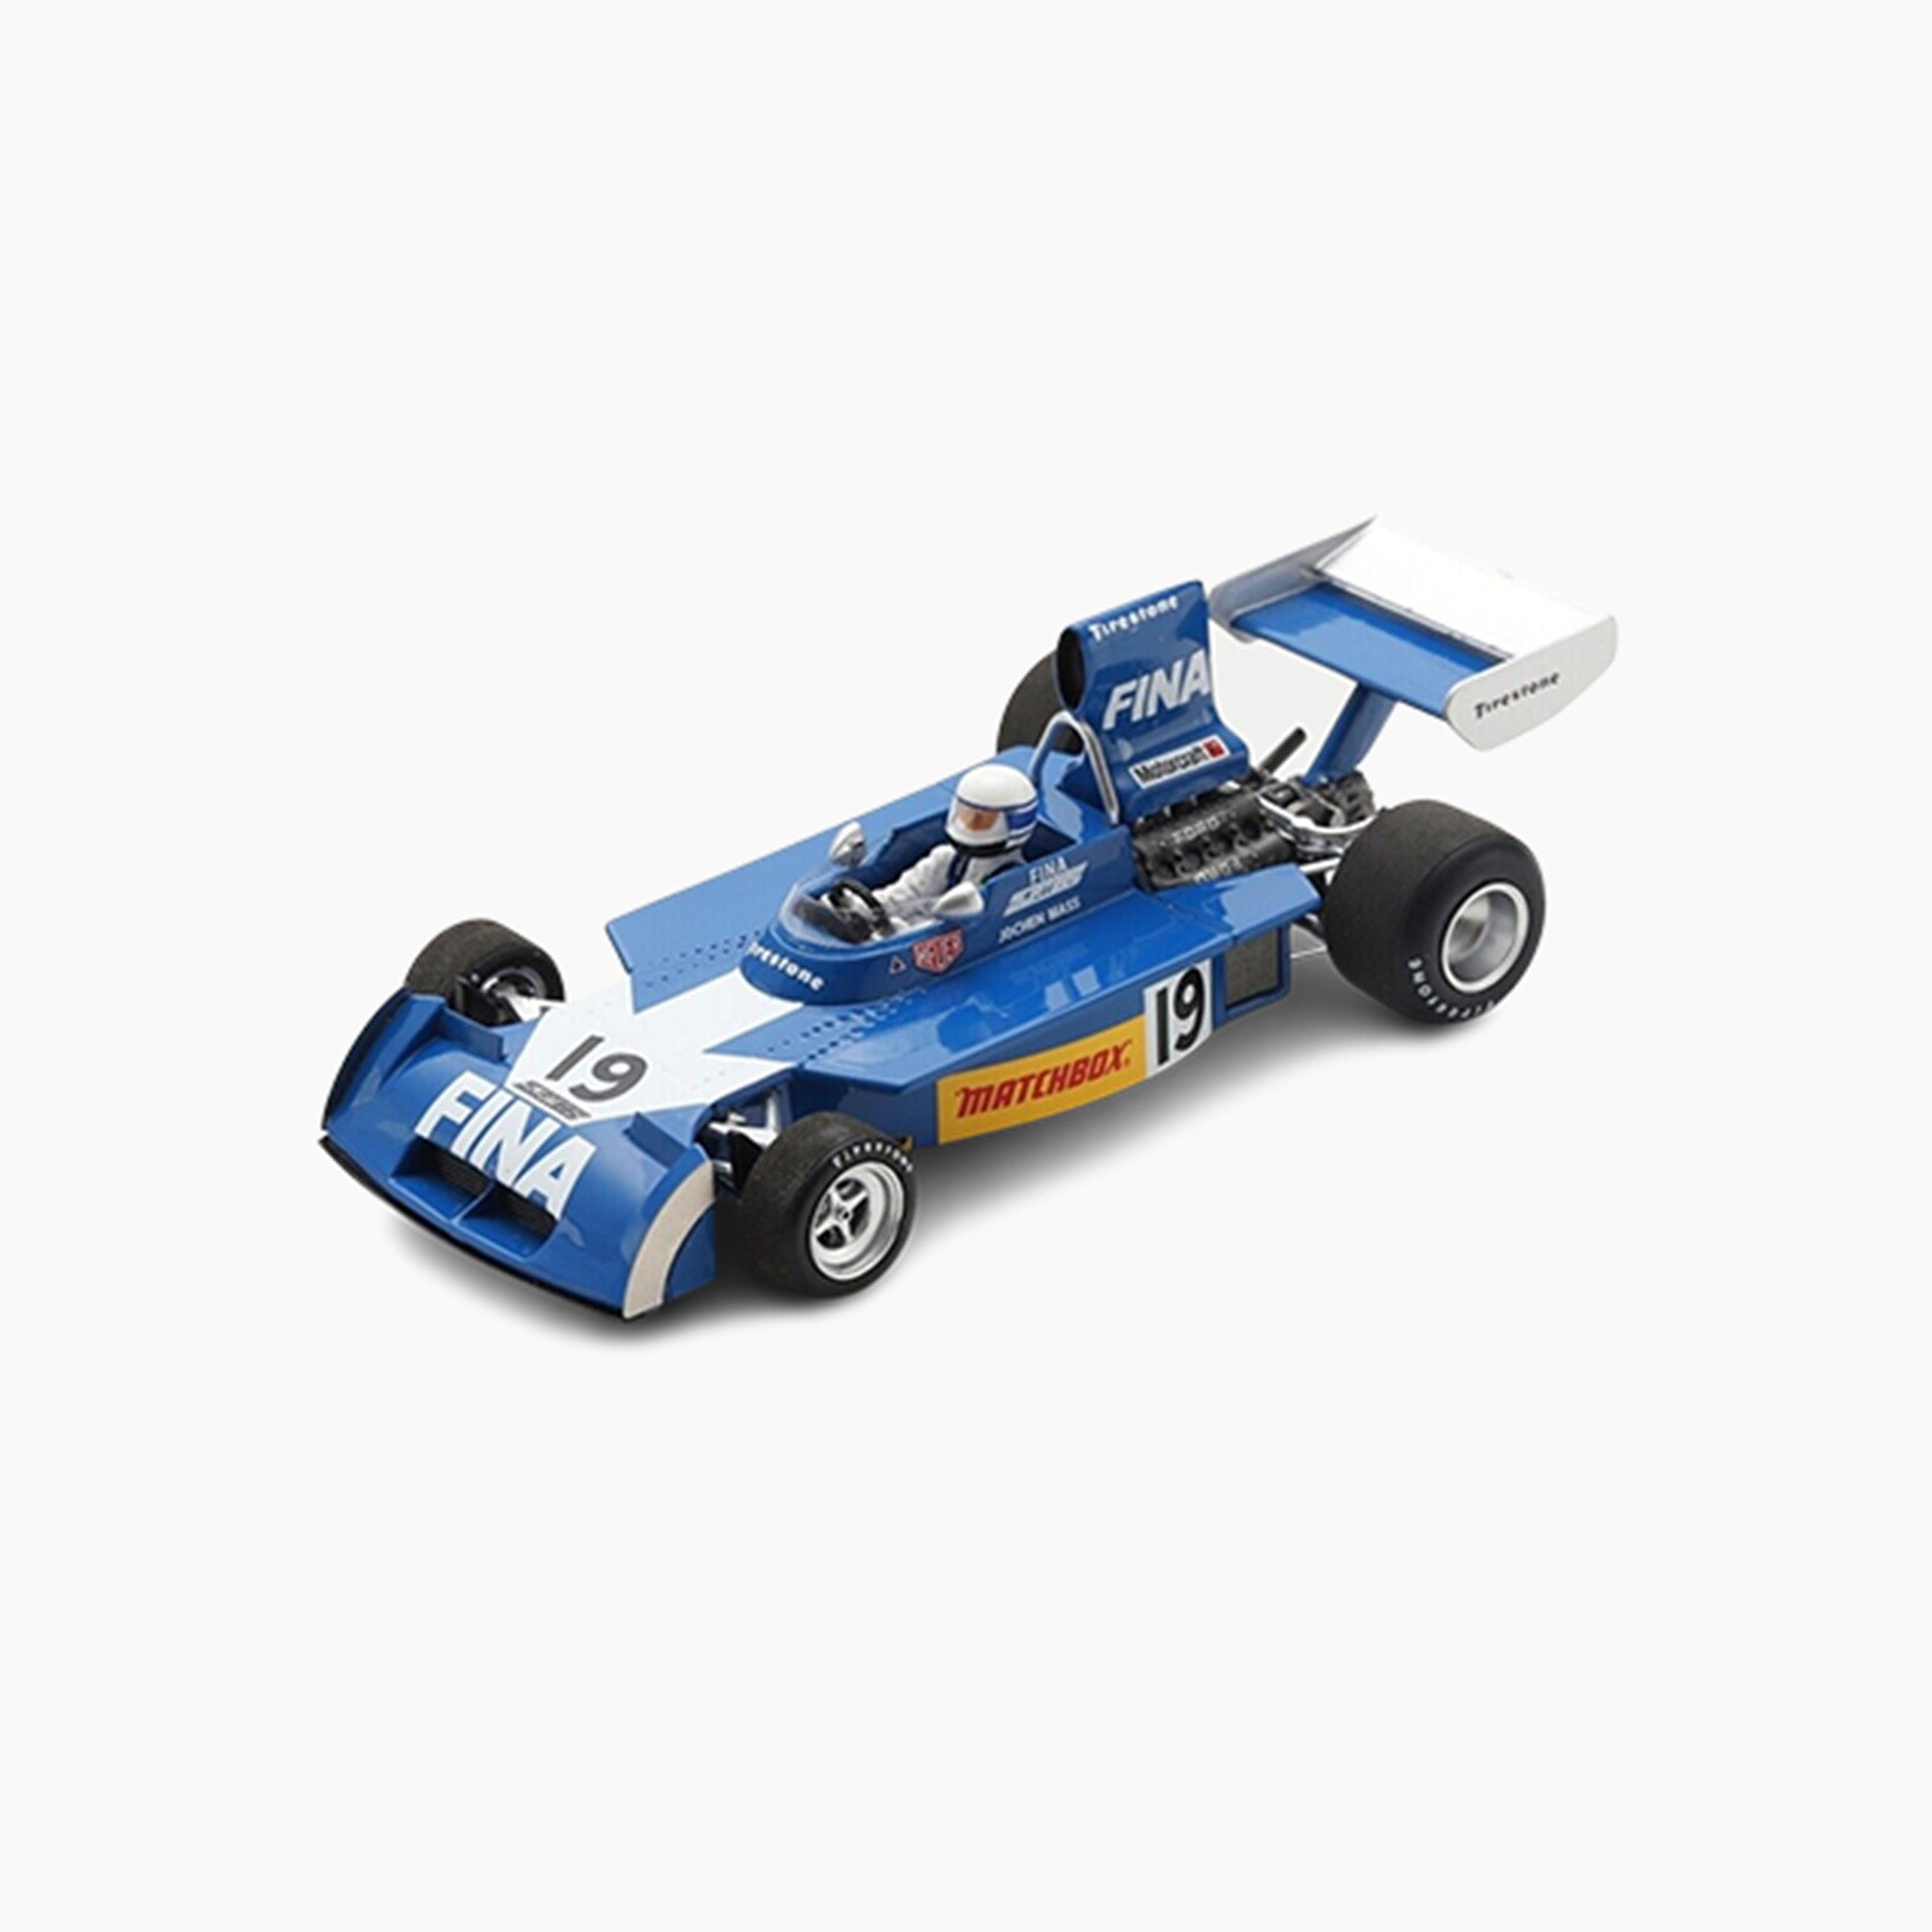 Surtees TS16 n°19 Brazil GP 1974 | 1:43 Scale Model-1:43 Scale Model-Spark Models-gpx-store